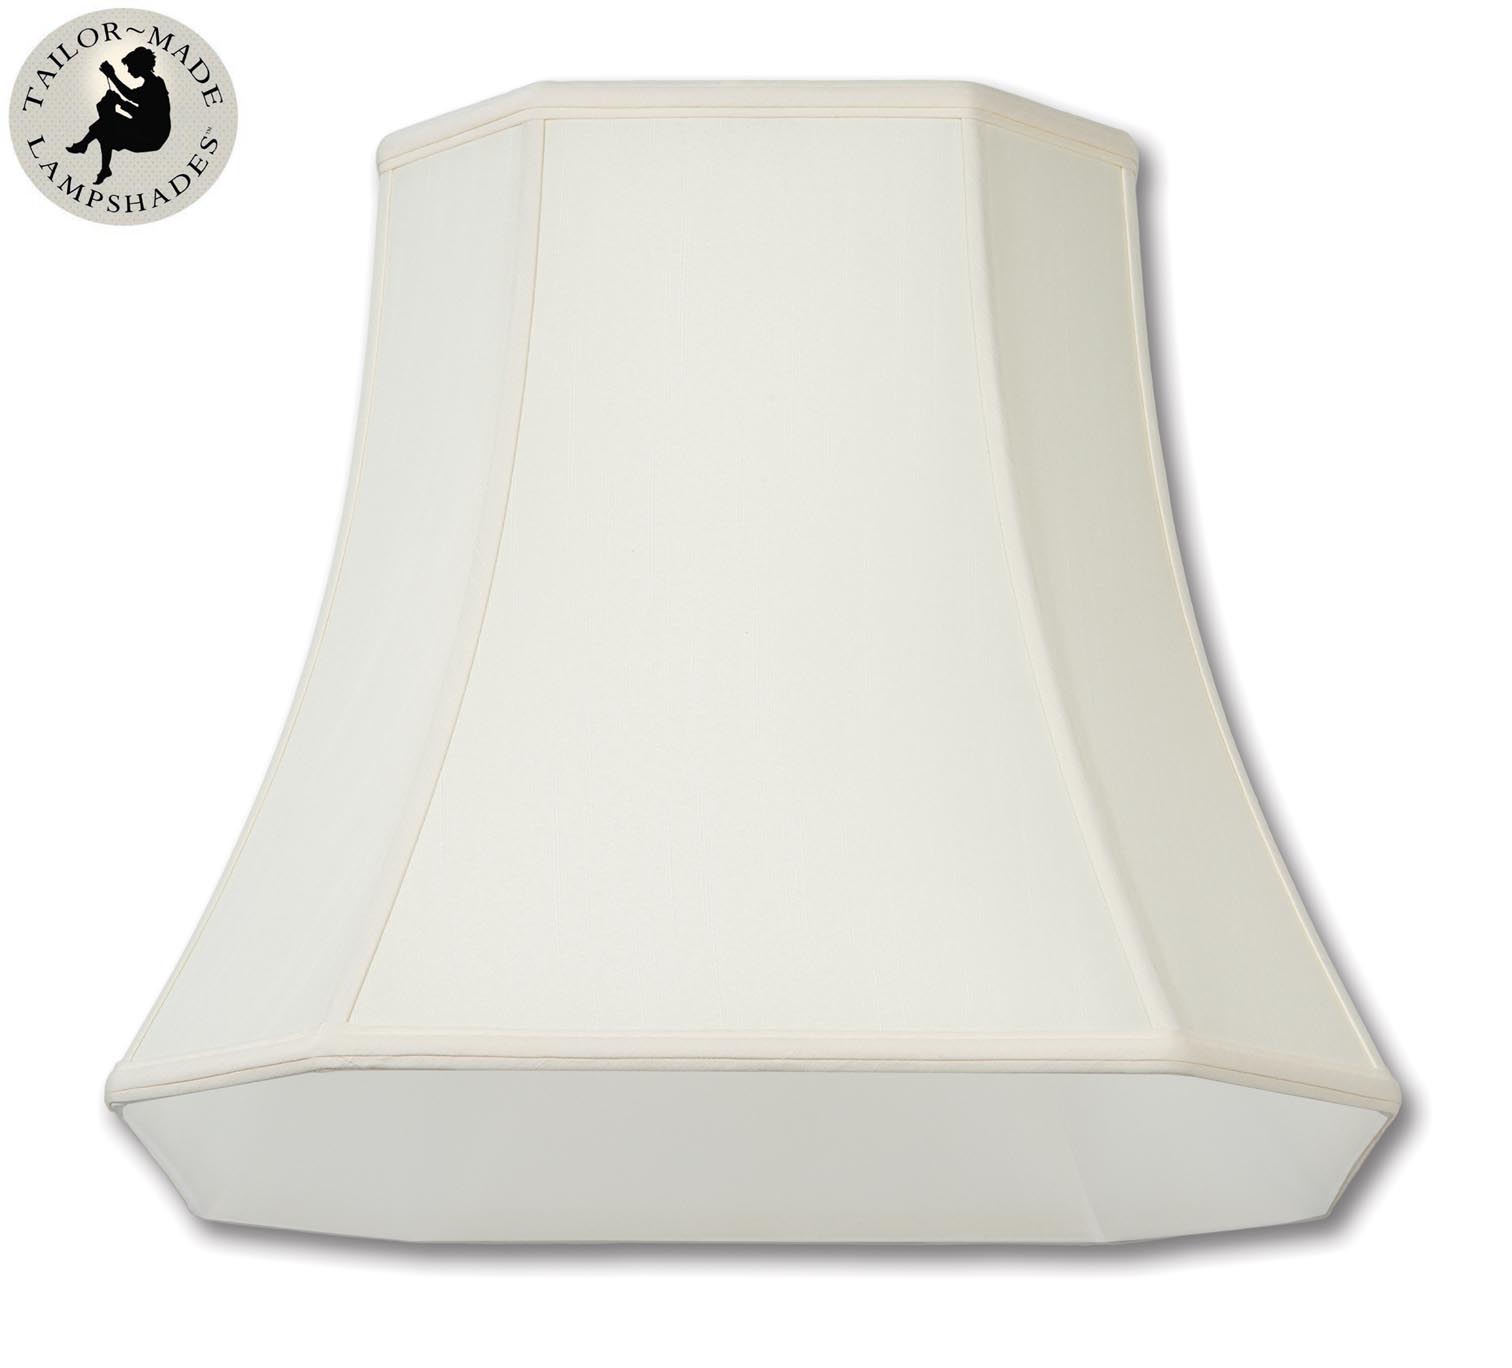 Cut Corner Square Lamp Shades - Off White Tissue Shantung Material